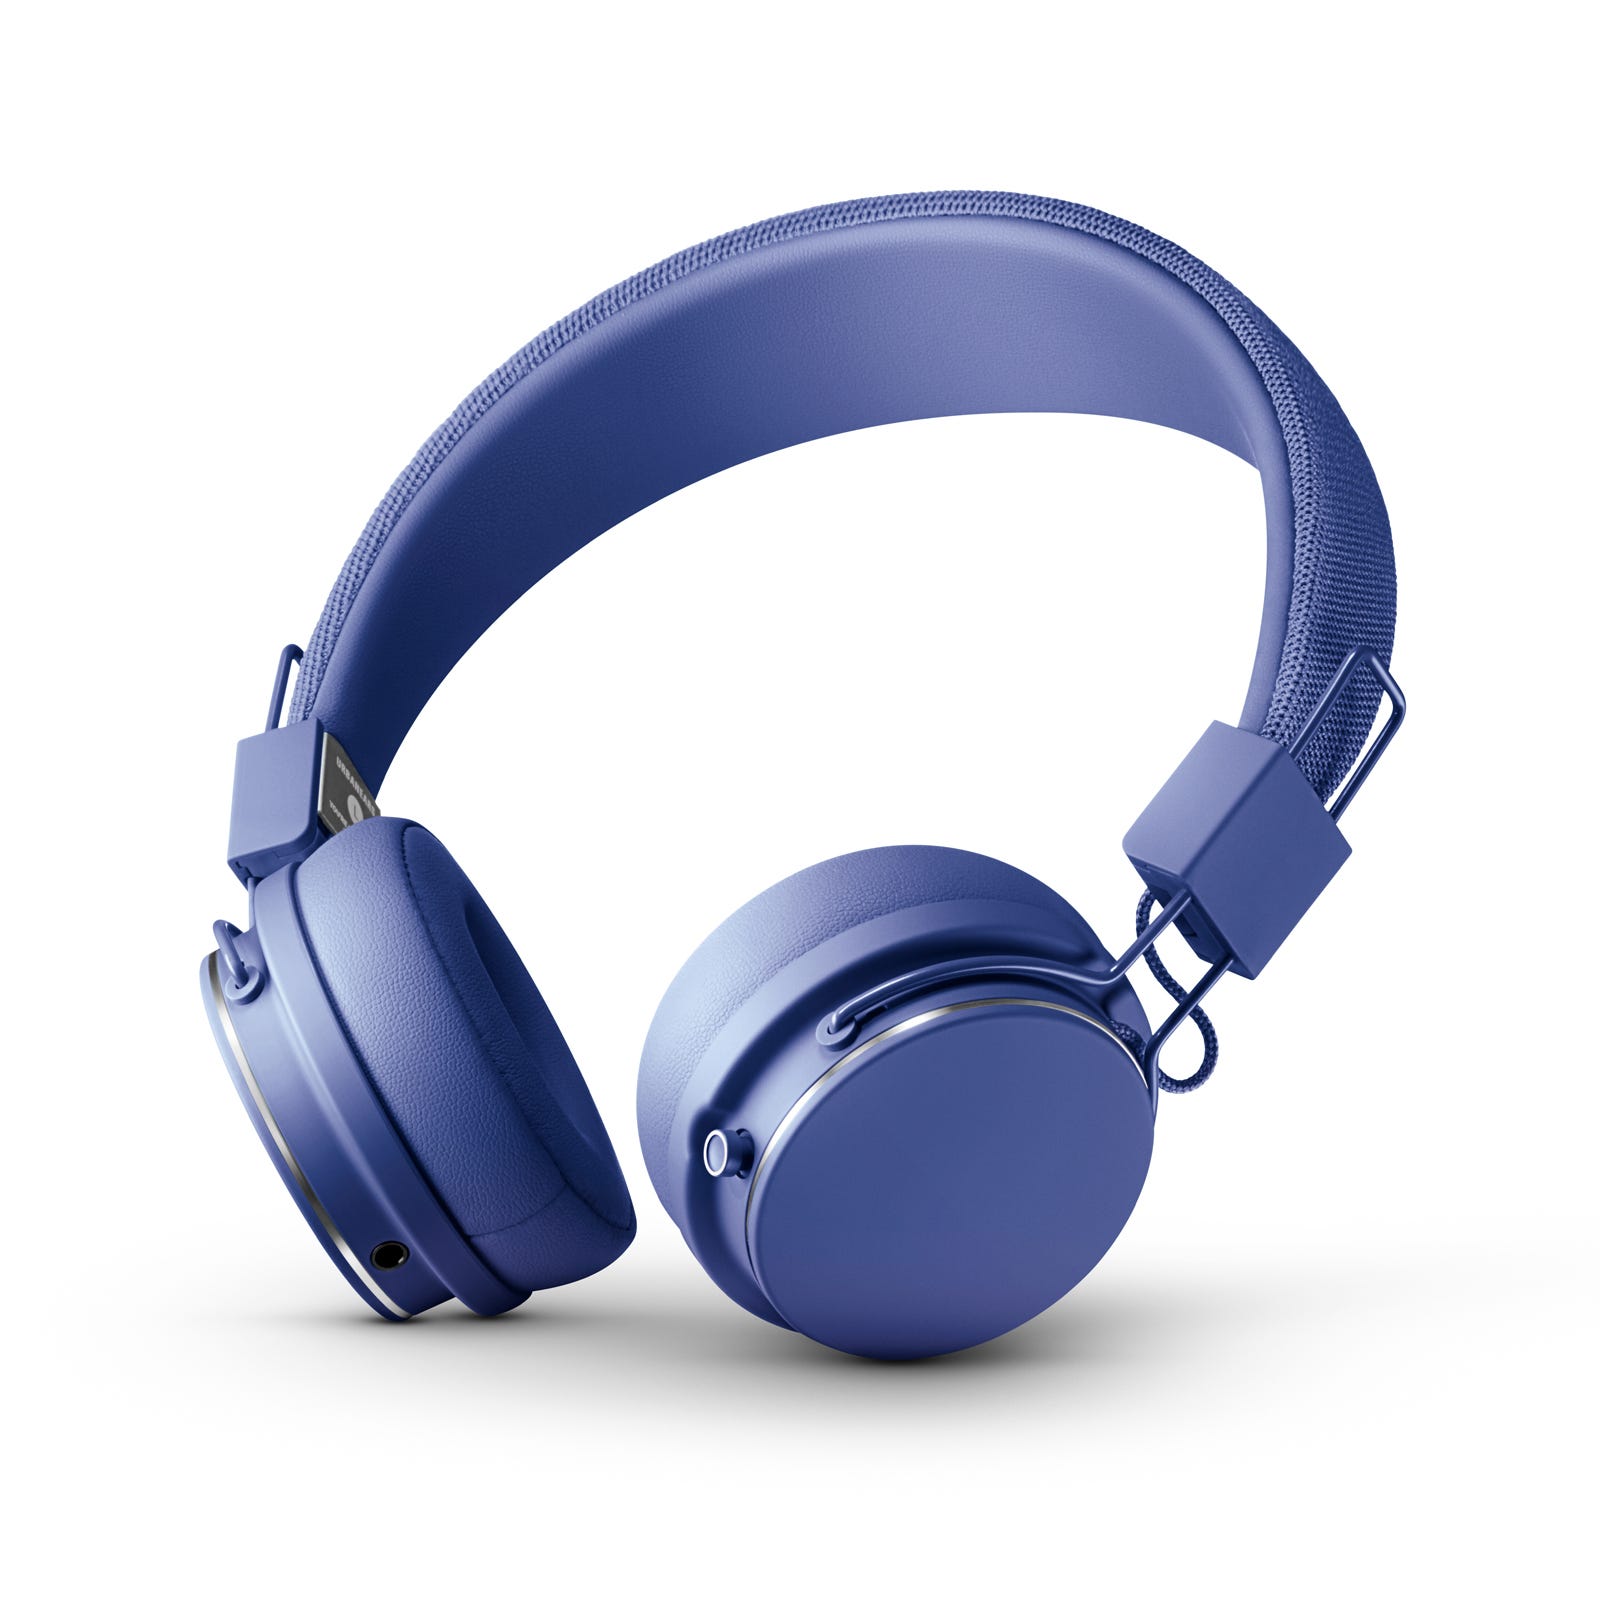 Gambar headset biru